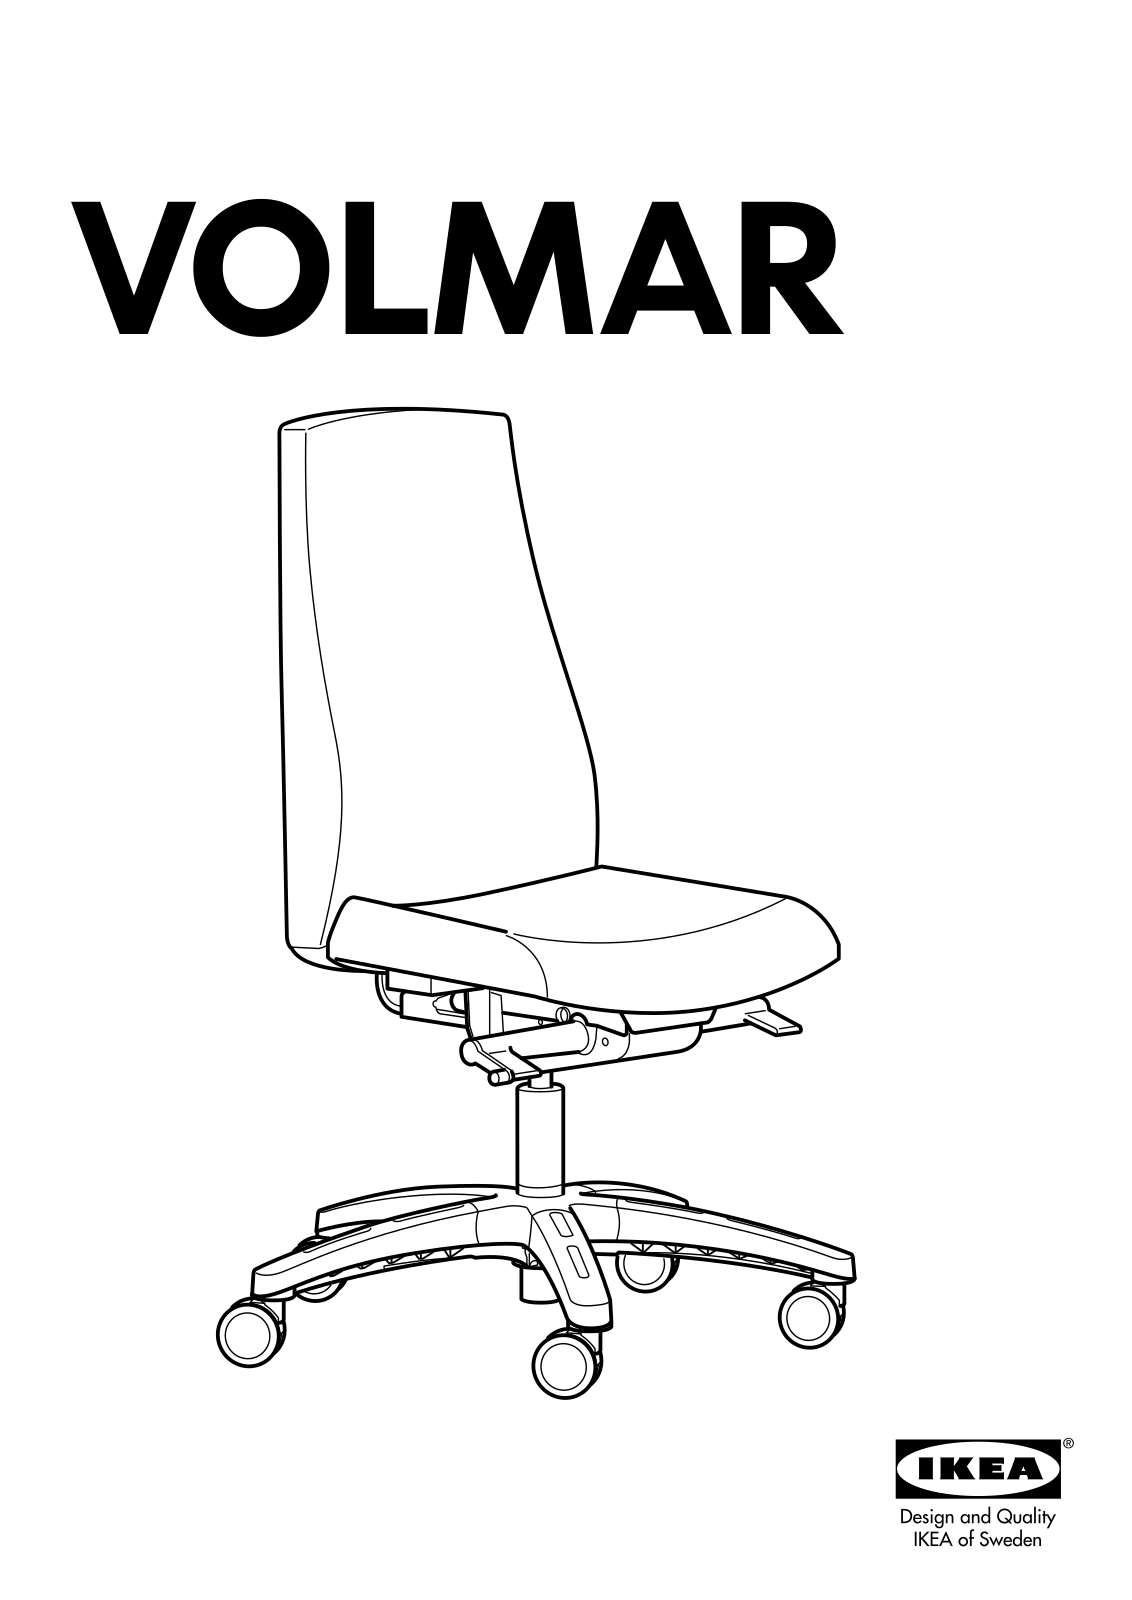 IKEA VOLMAR User Manual